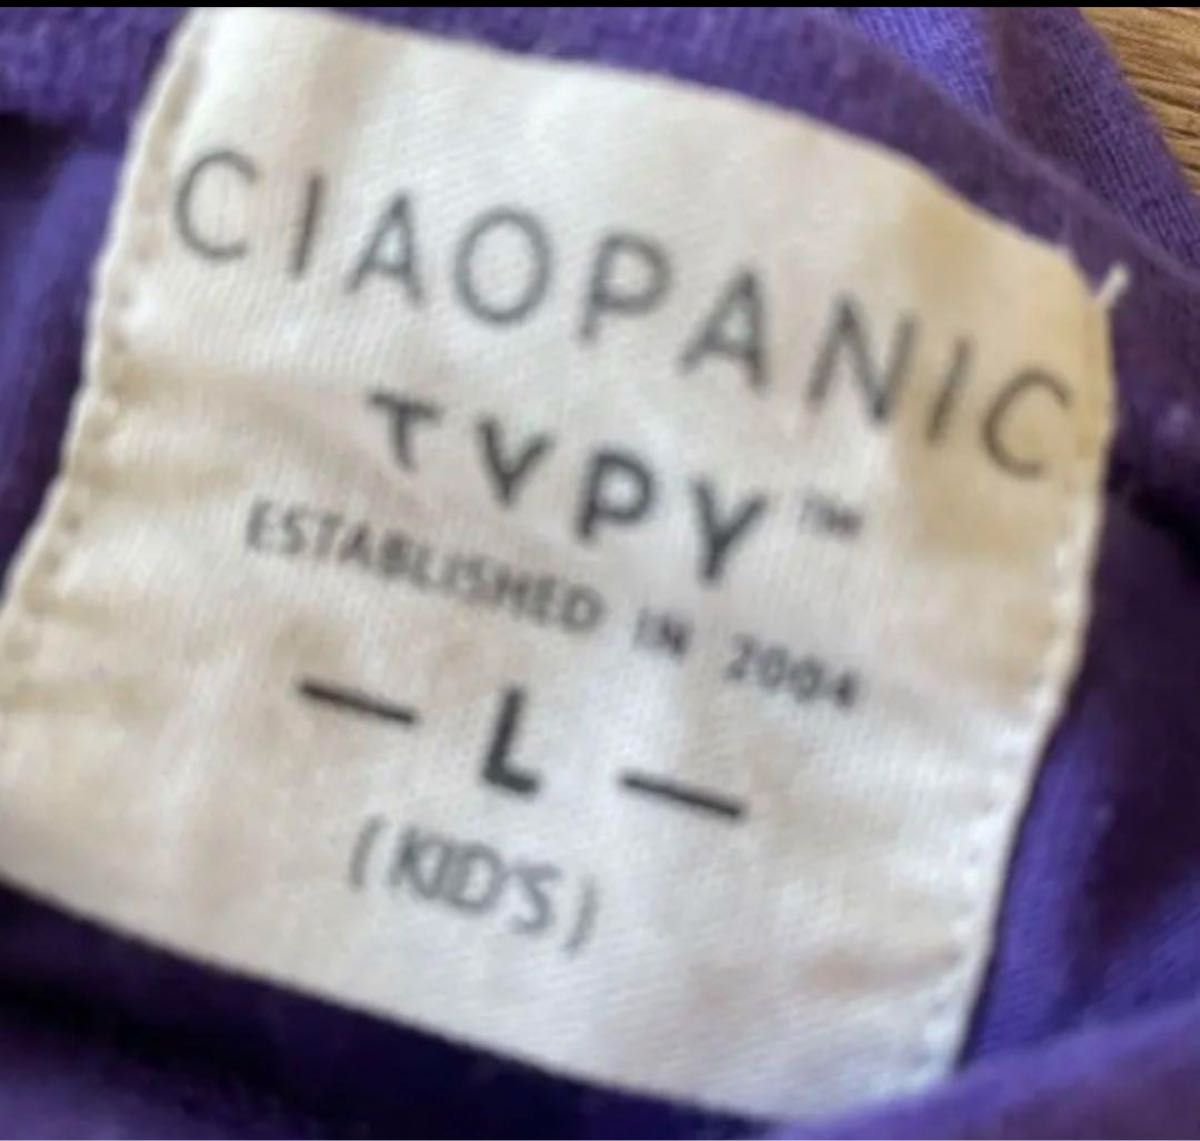 CIAOPANIC TYPY チャオパニックティピー袖フリルカットソー120cm カットソー Tシャツ